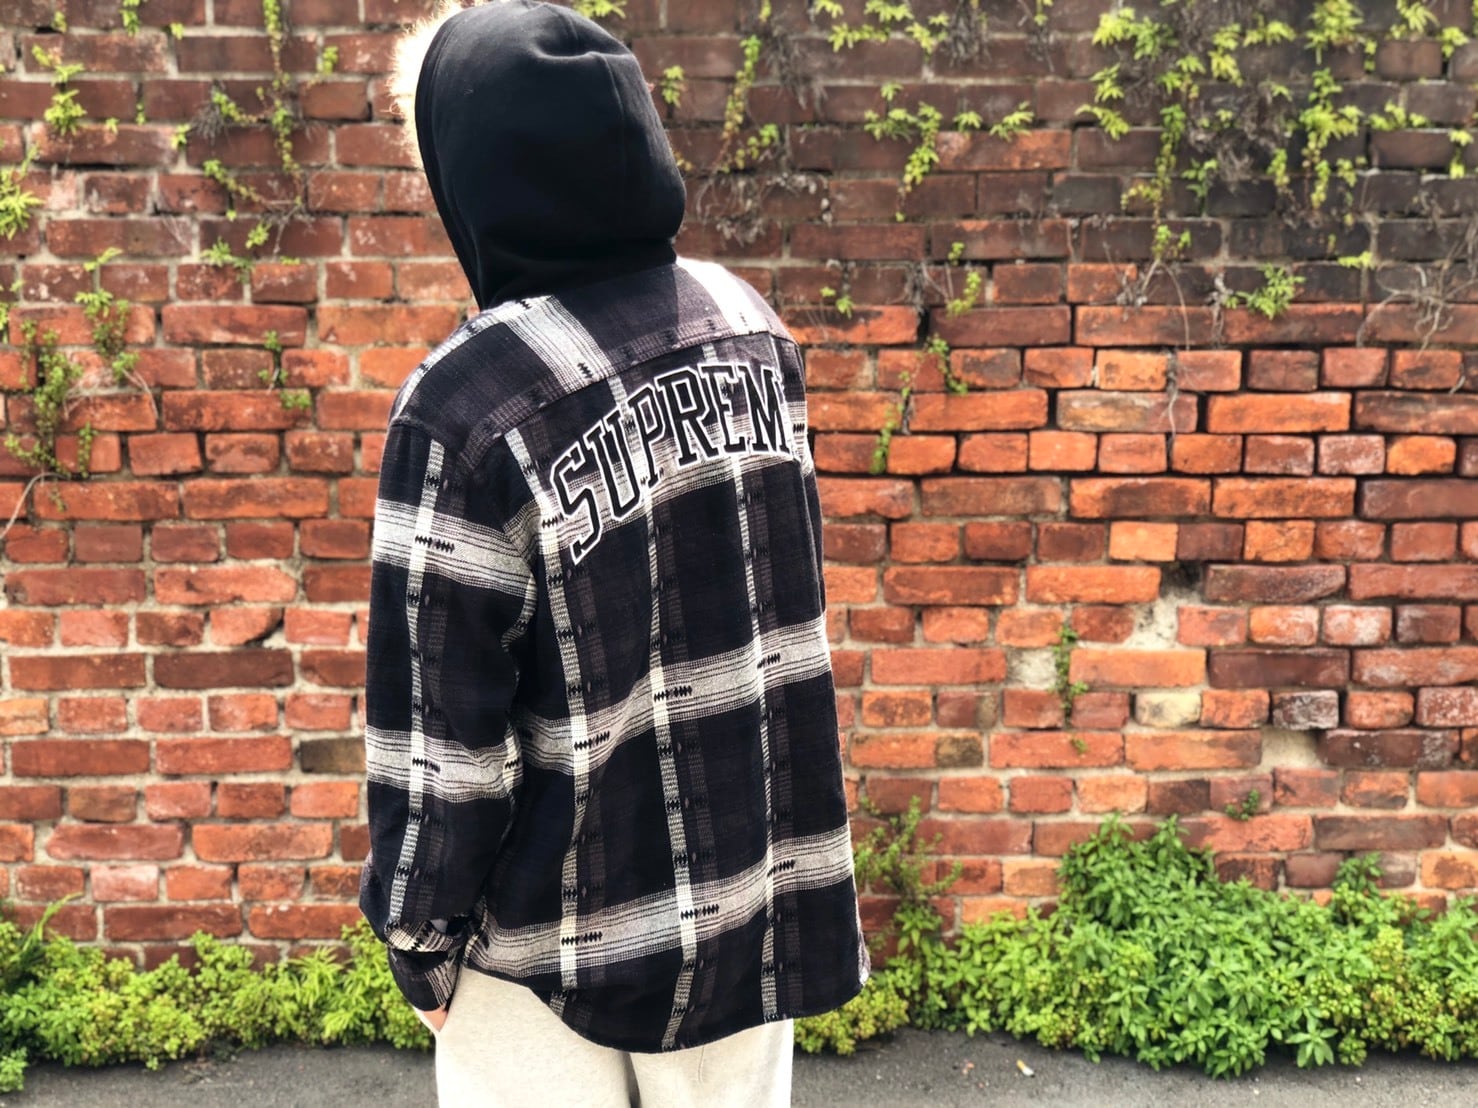 【S】Supreme Hooded Jacquard Flannel Shirt